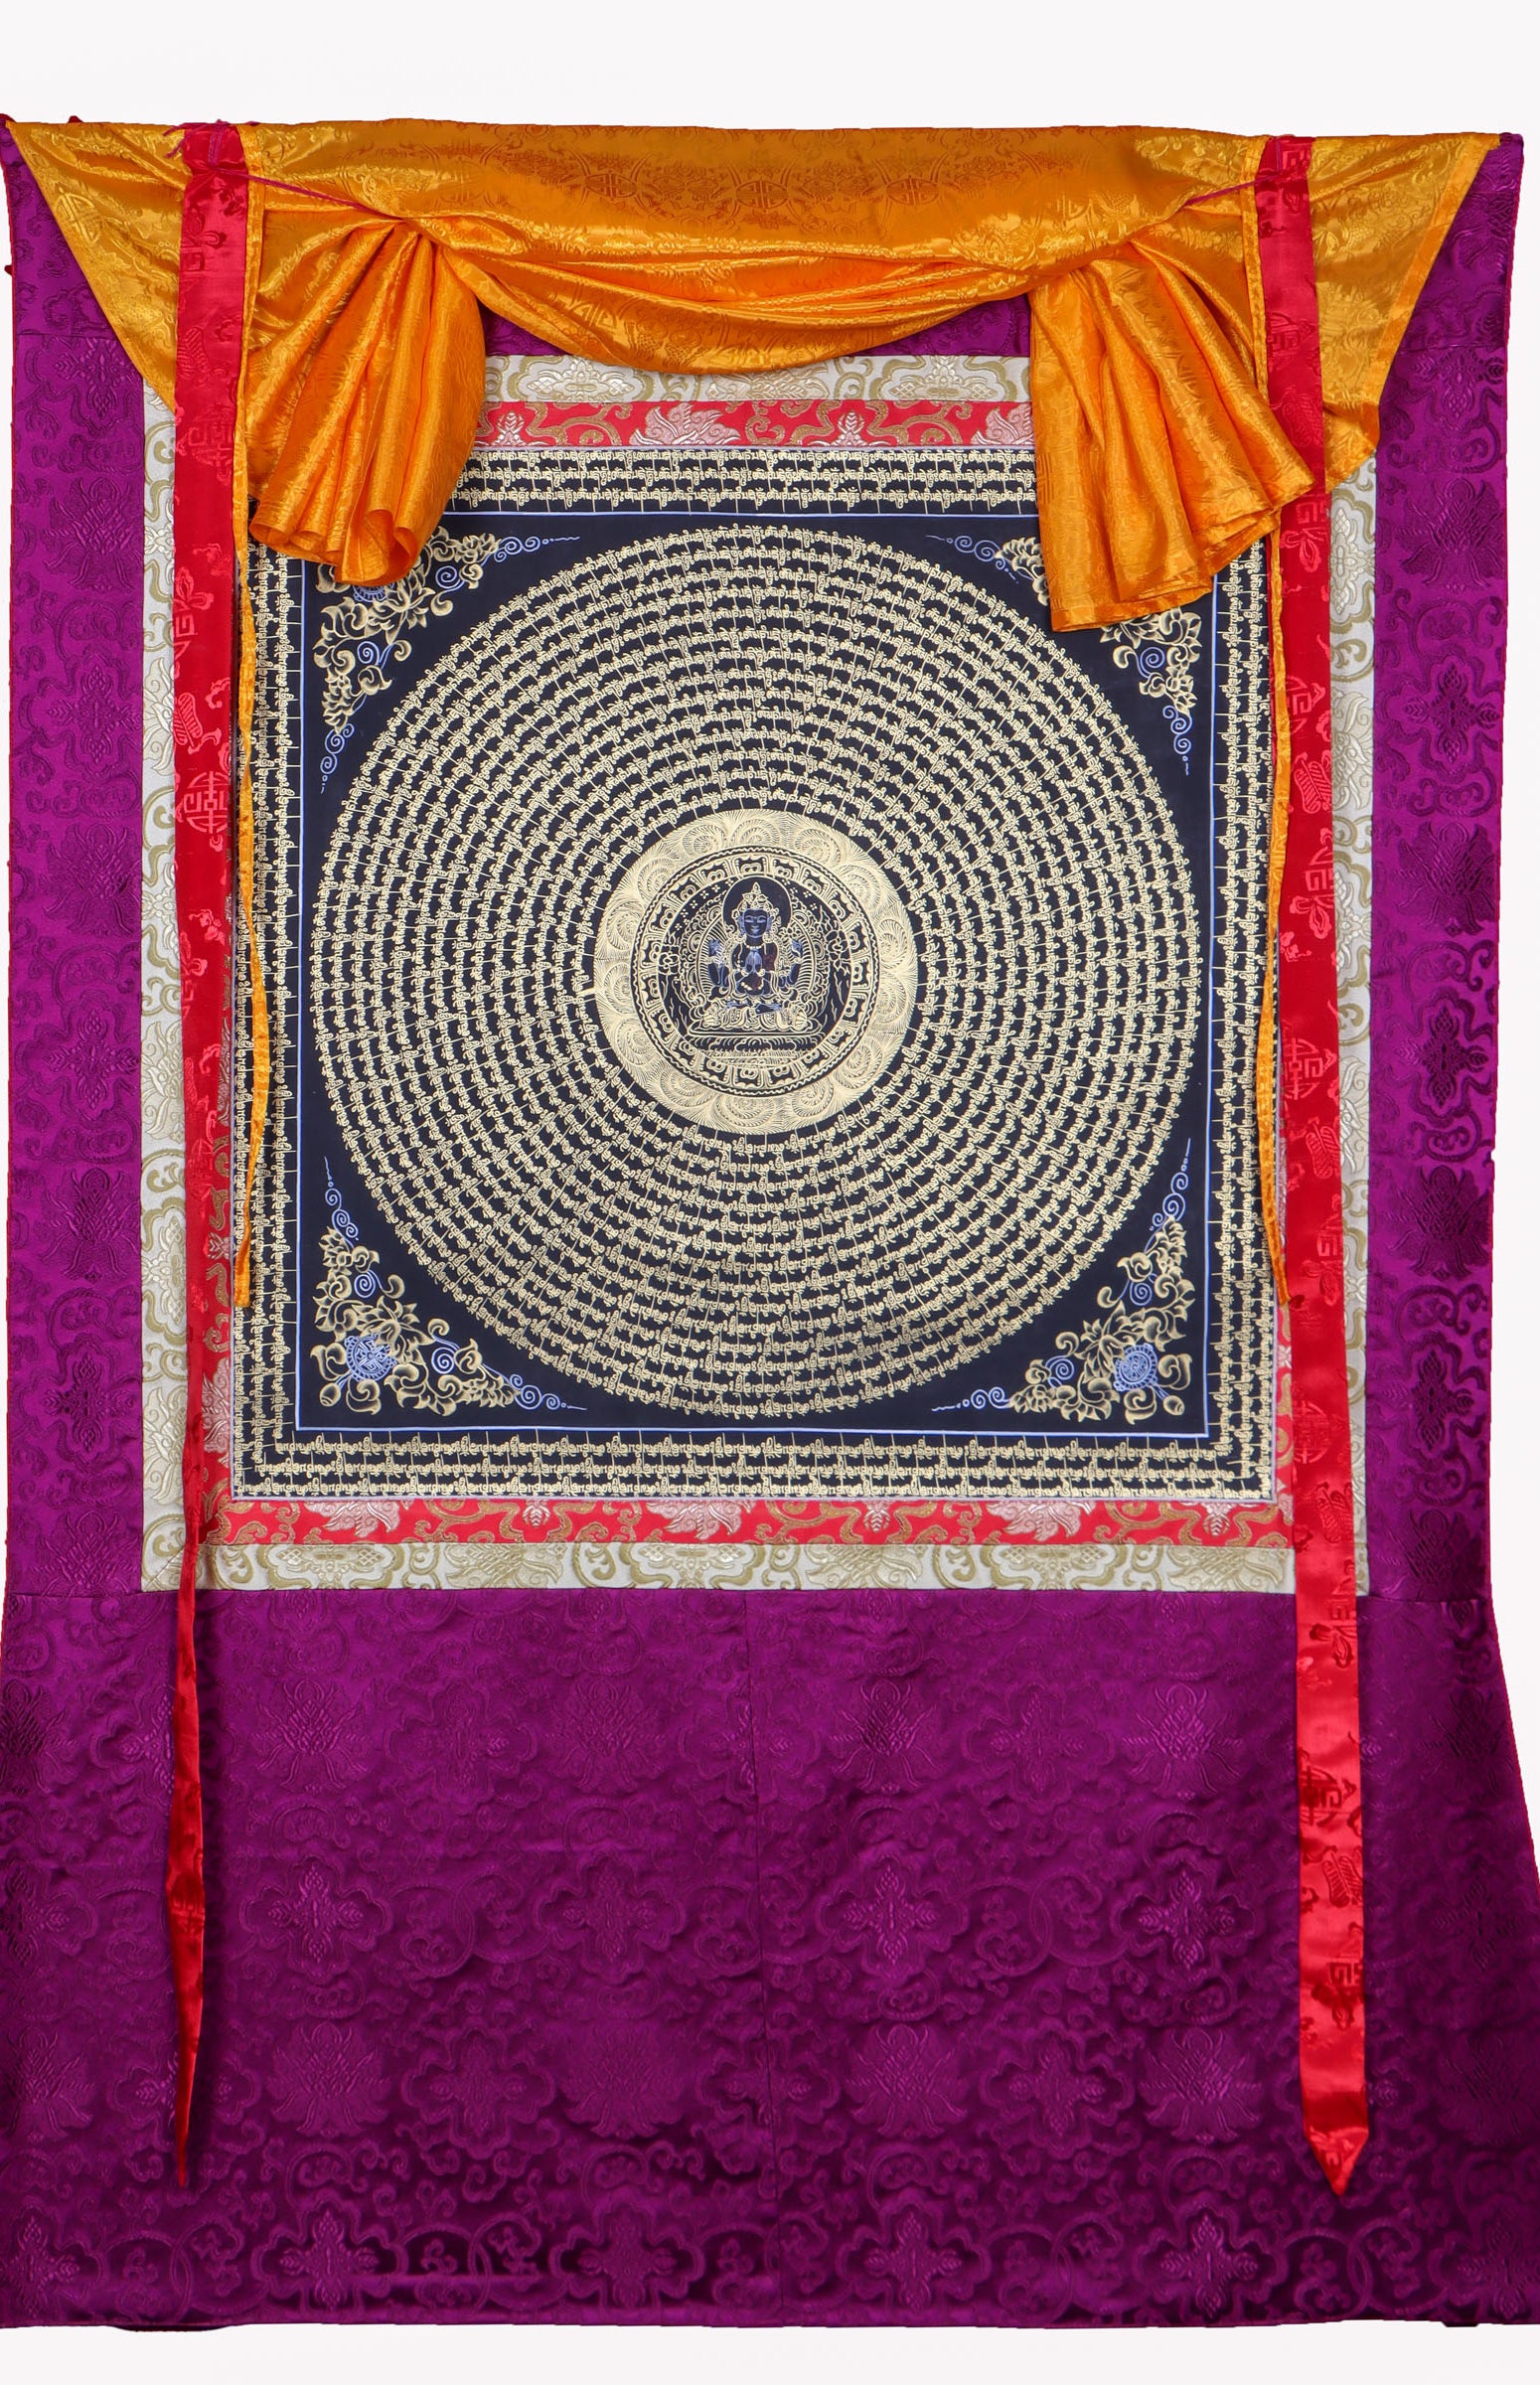  Shiva Mandala Brocade Thangka Painting  for prayer and meditation.